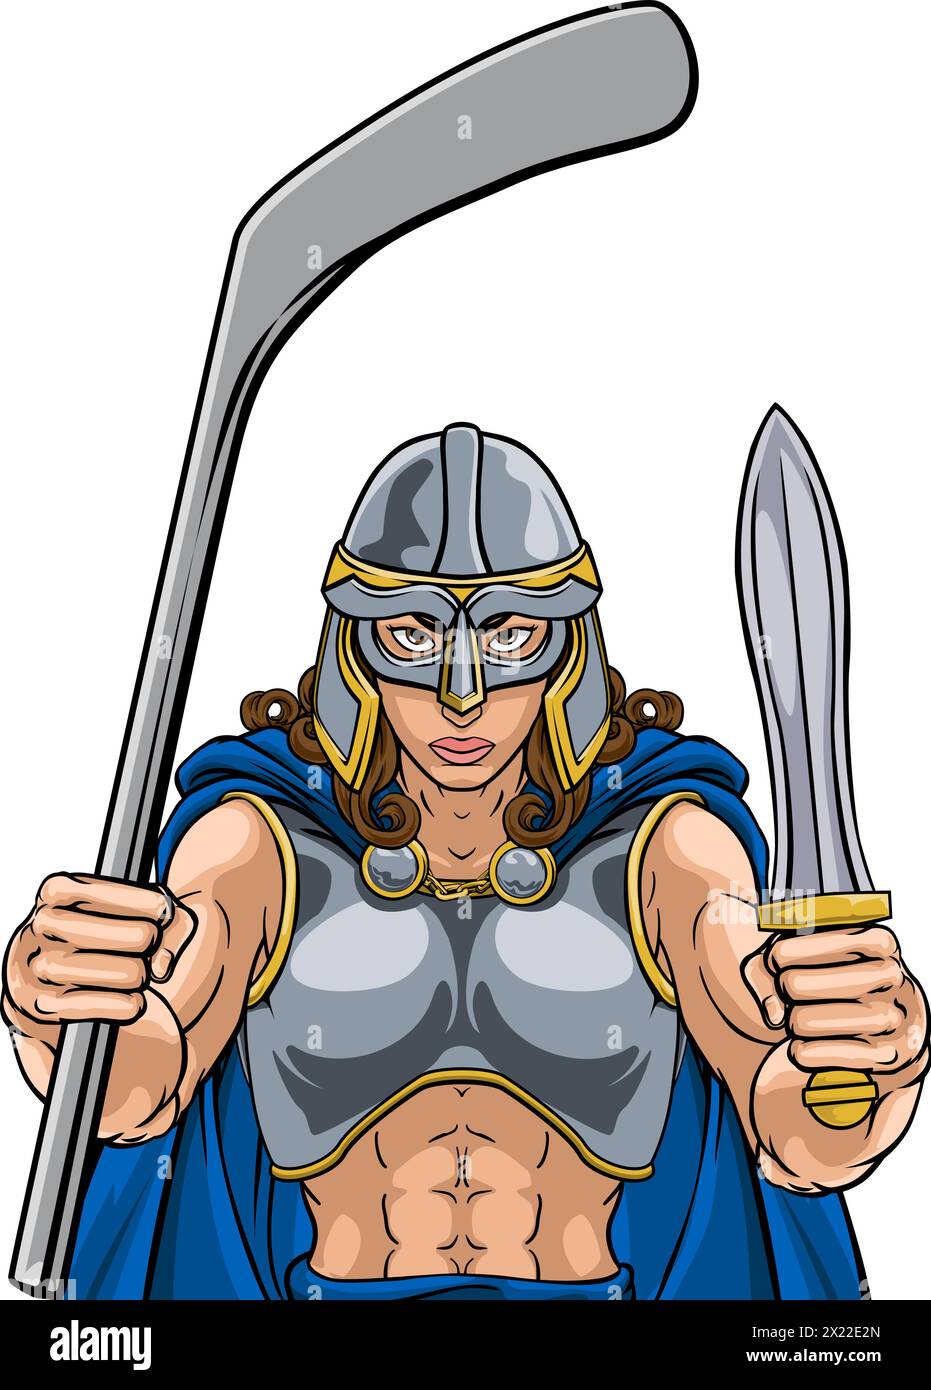 Viking Warrior Woman Ice Hockey Sports Team Mascot Illustrazione Vettoriale